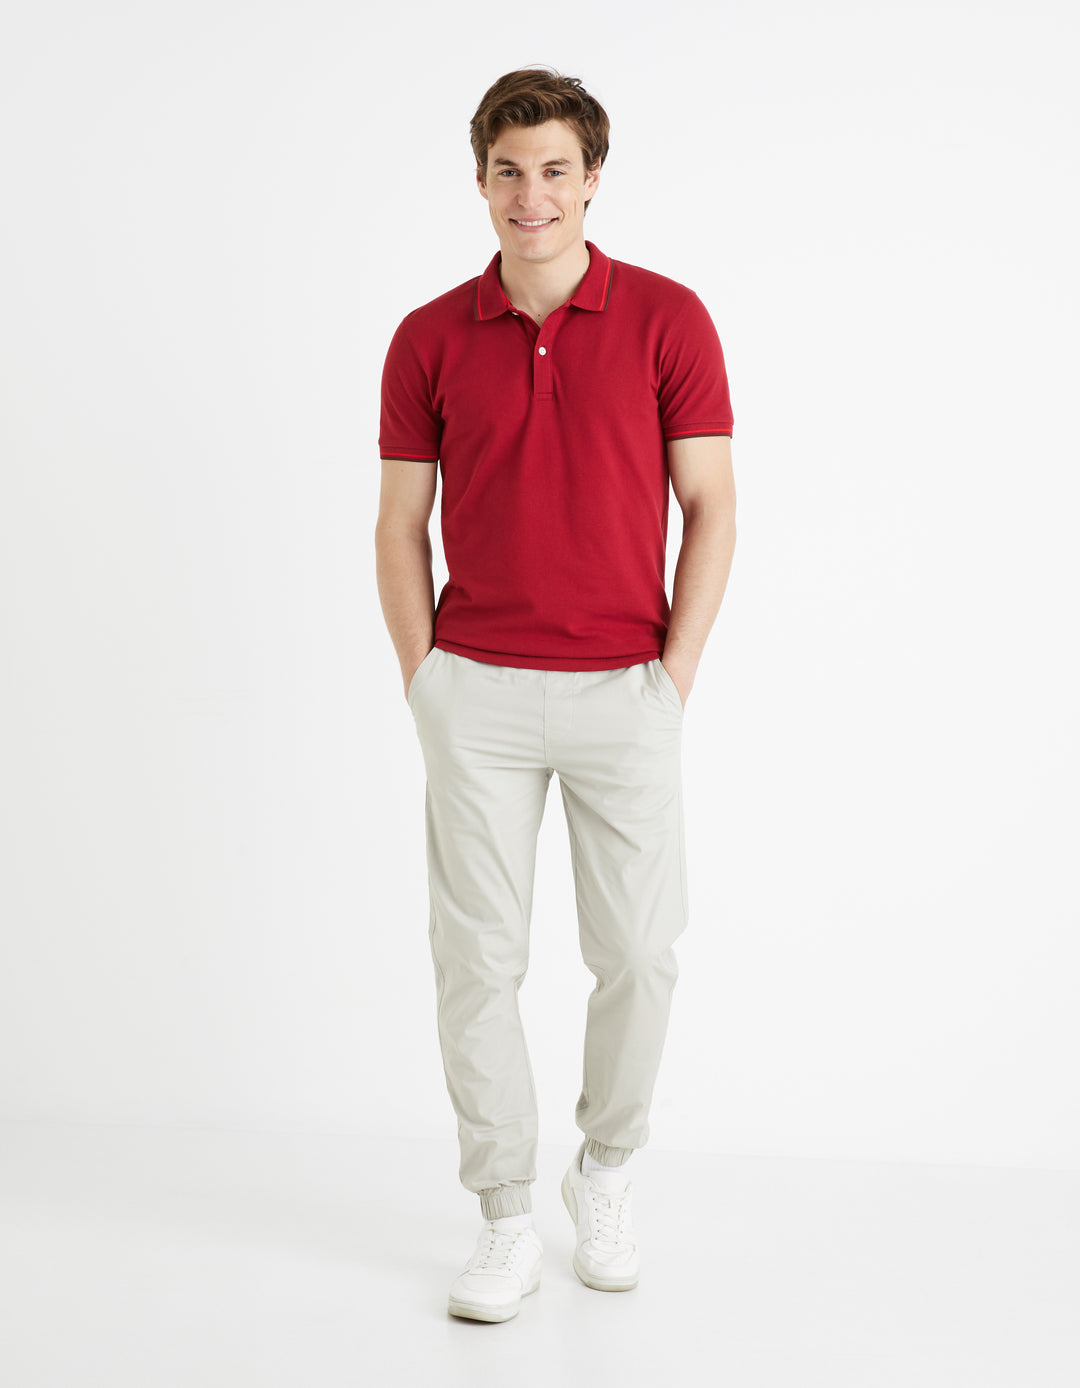 Men - Knitted - Polo Shirt - Short sleeves